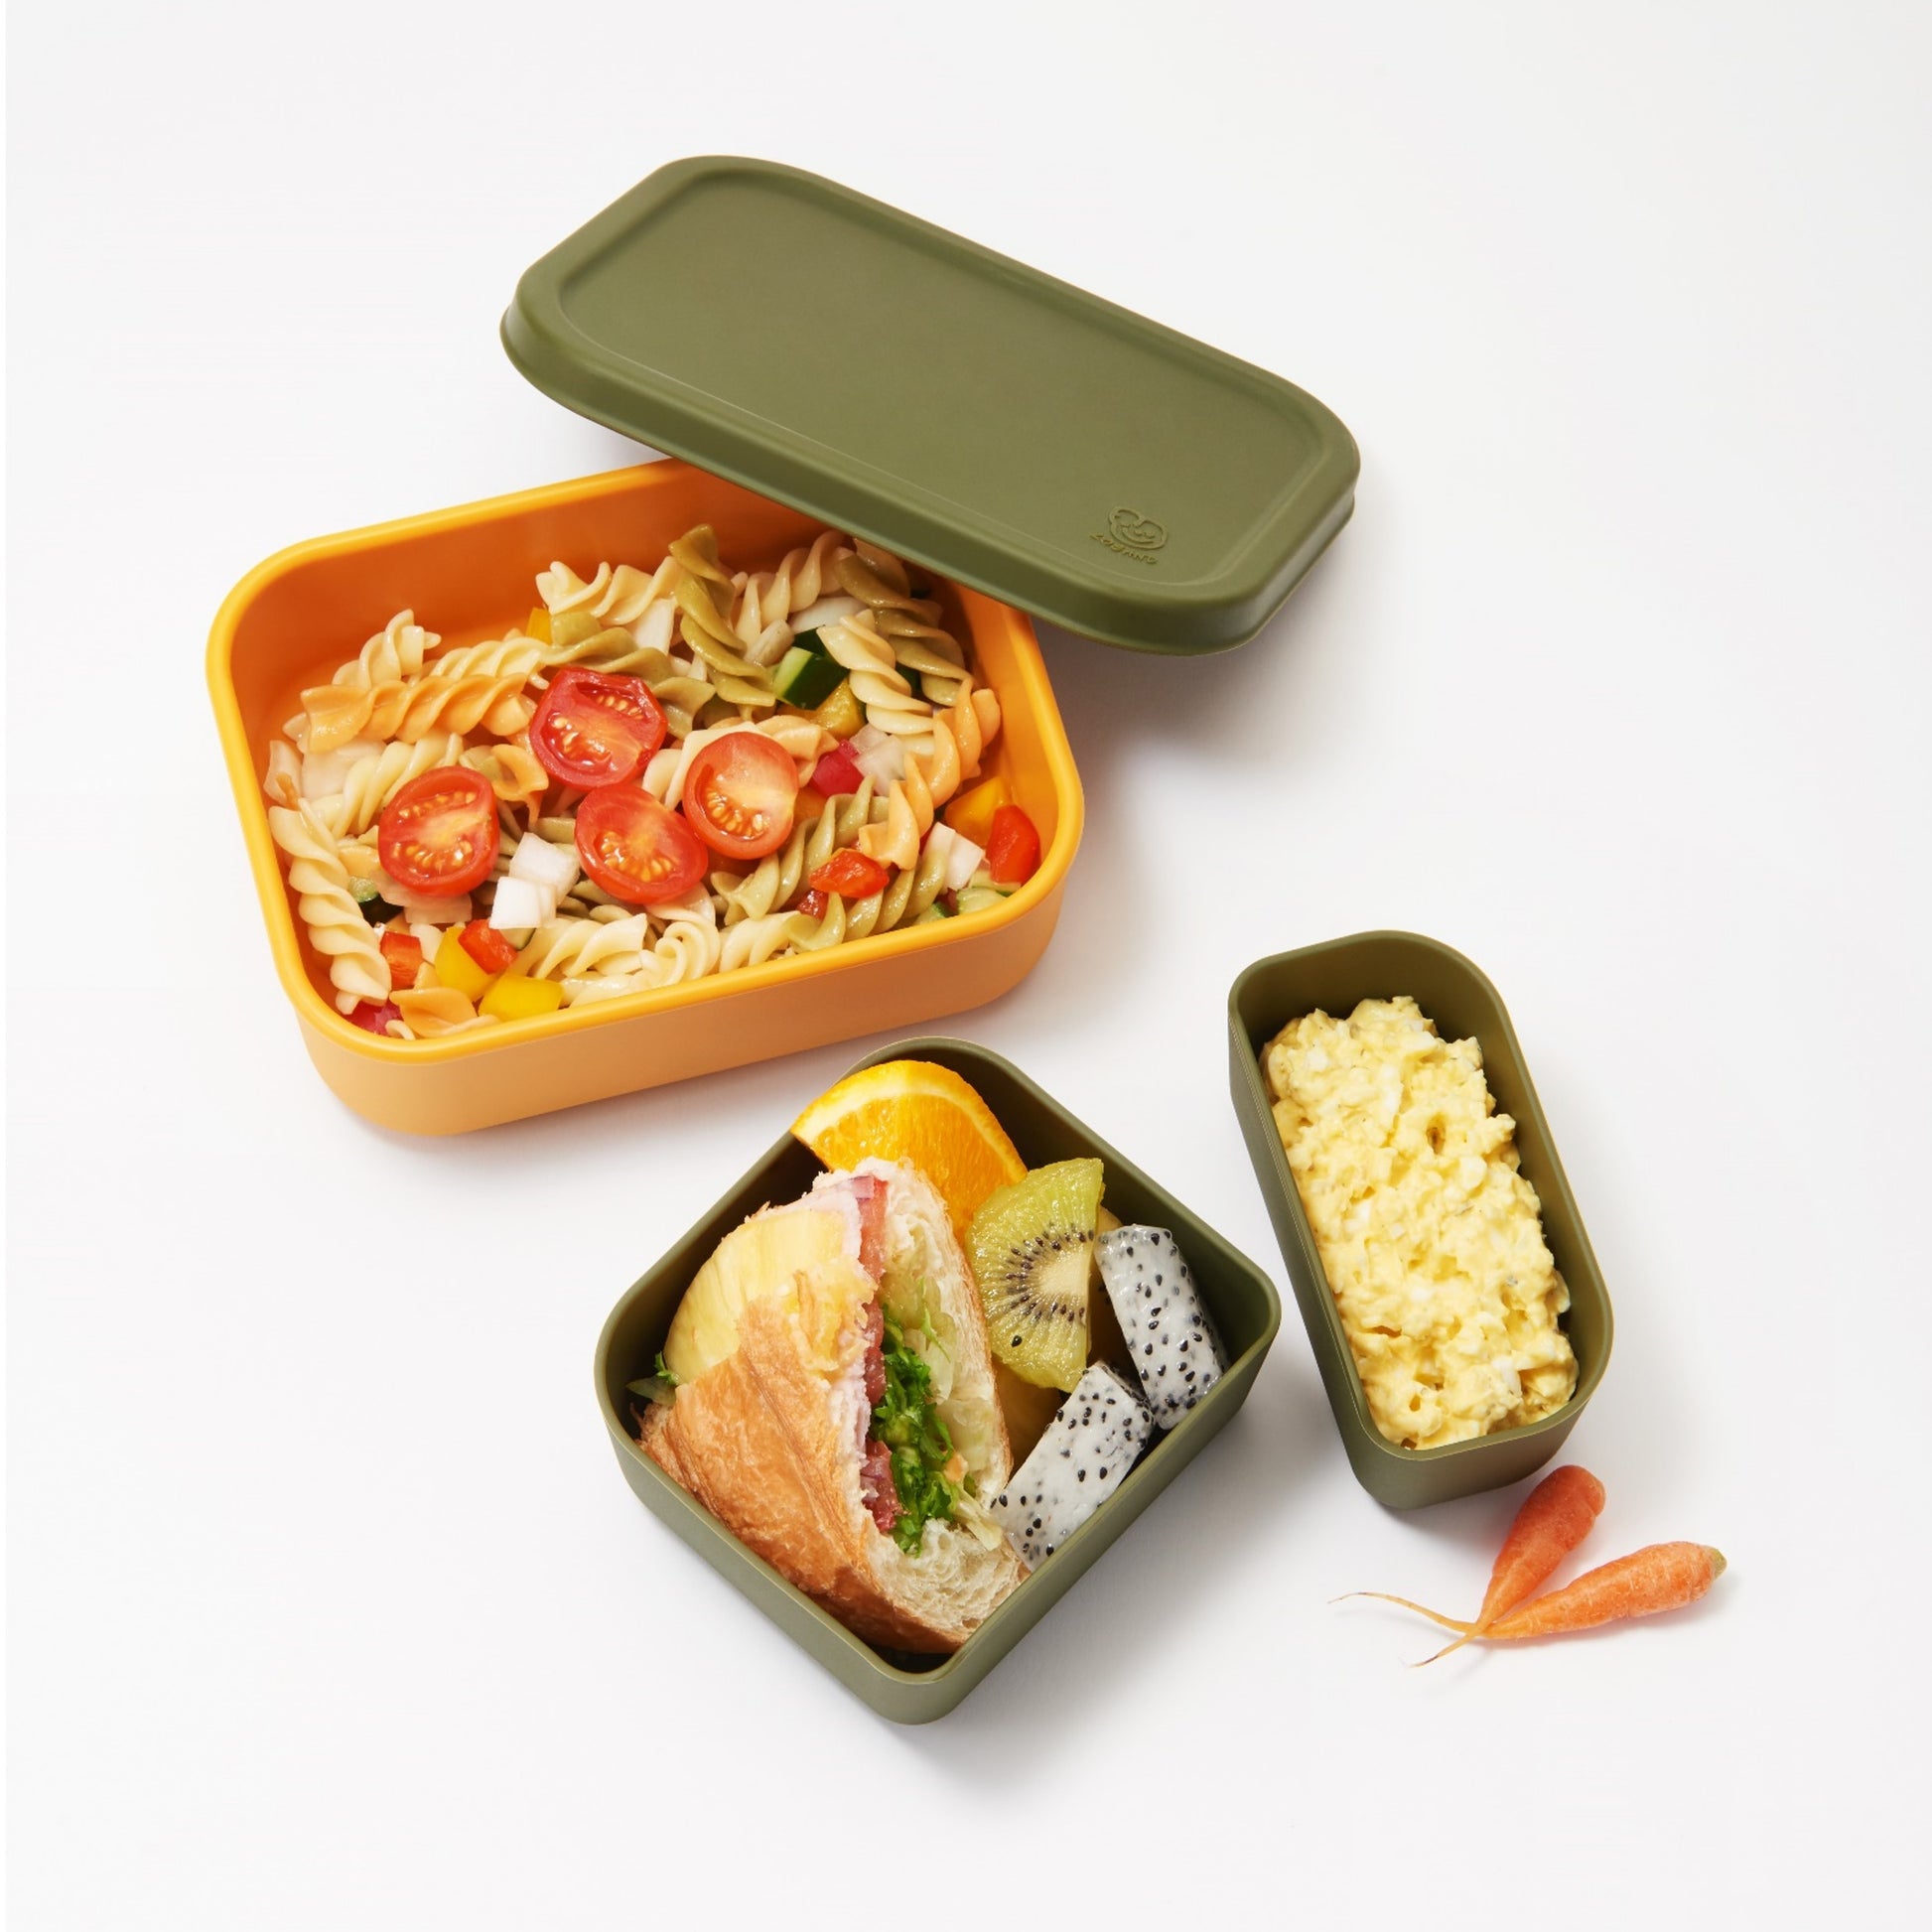 LOSAND FLEXBOX Platinum Silicone Lunch Container – Mixtureproof